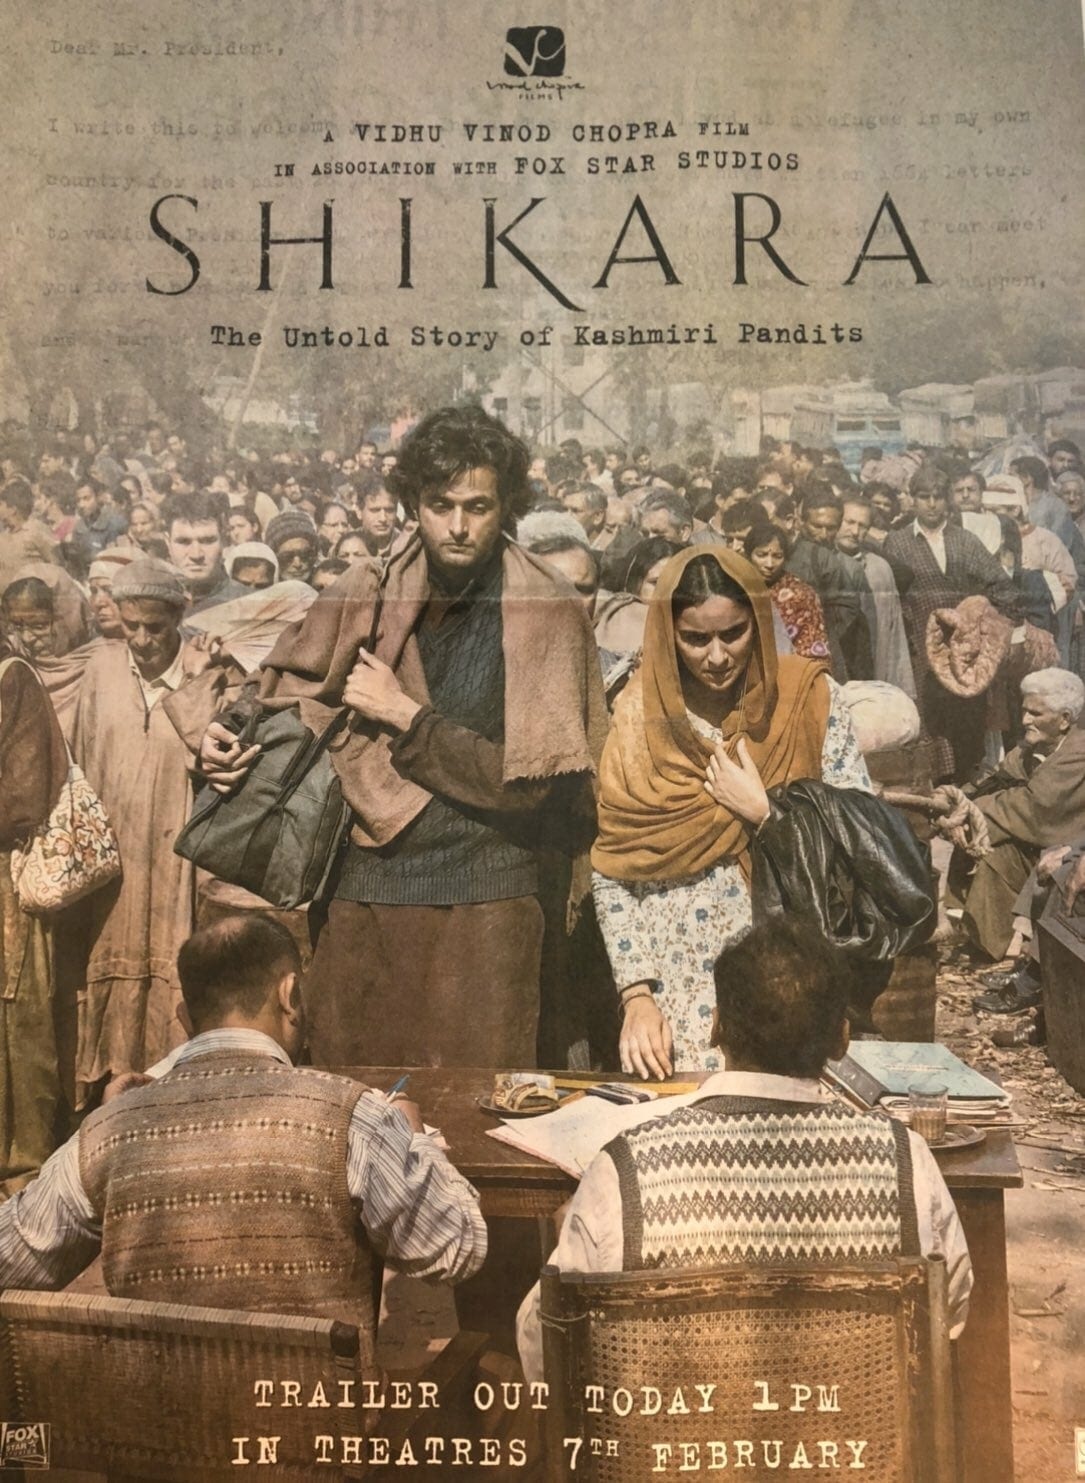 Poster for the movie "Shikara"